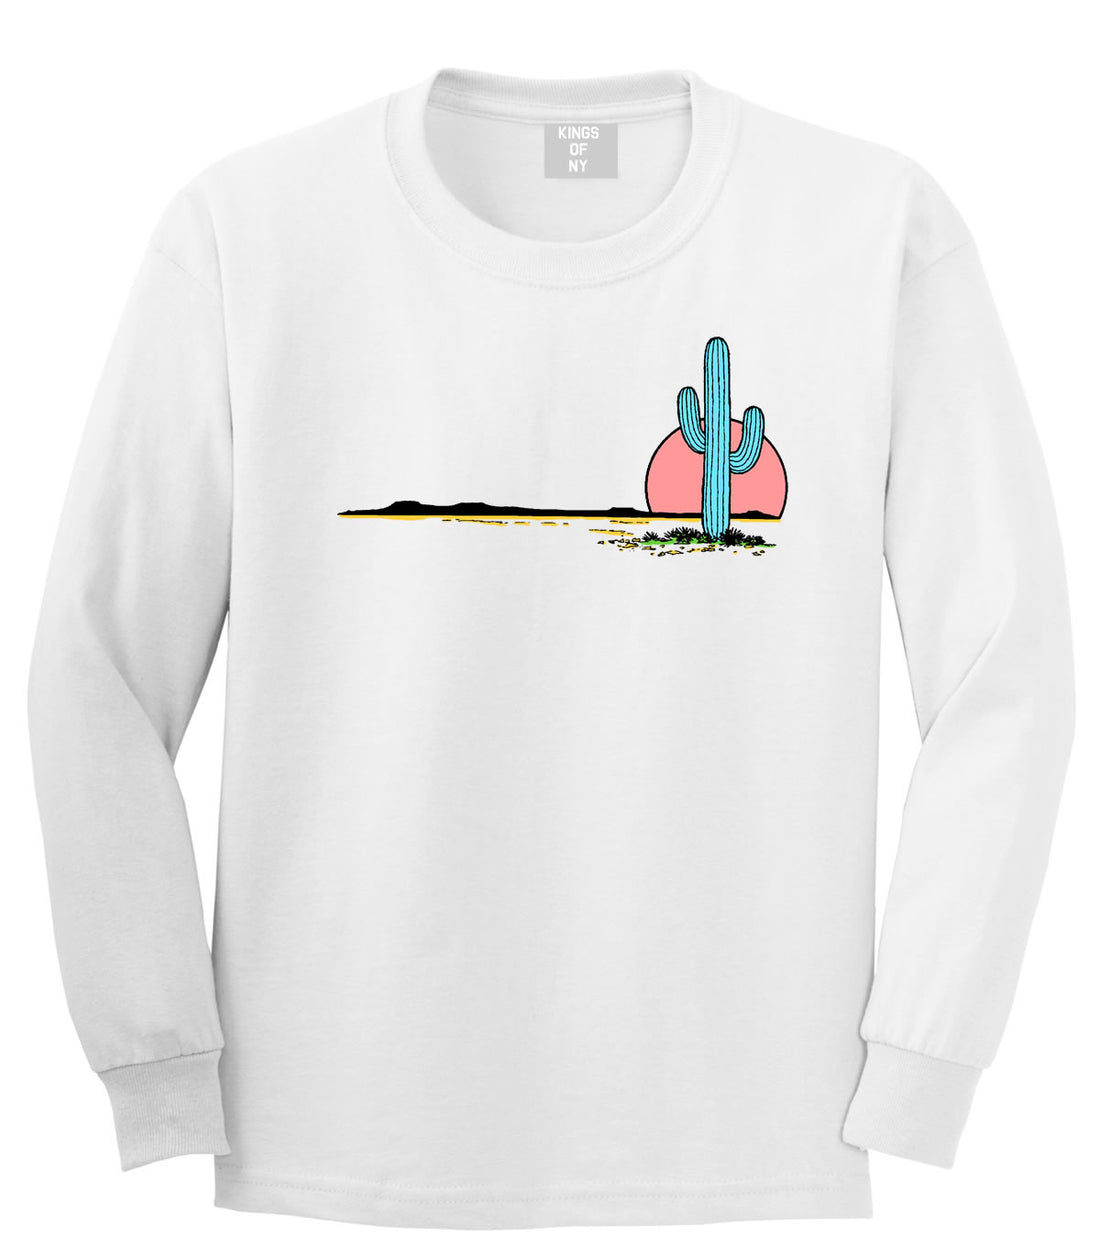 Cactus Sunrise Long Sleeve T-Shirt By Kings Of NY